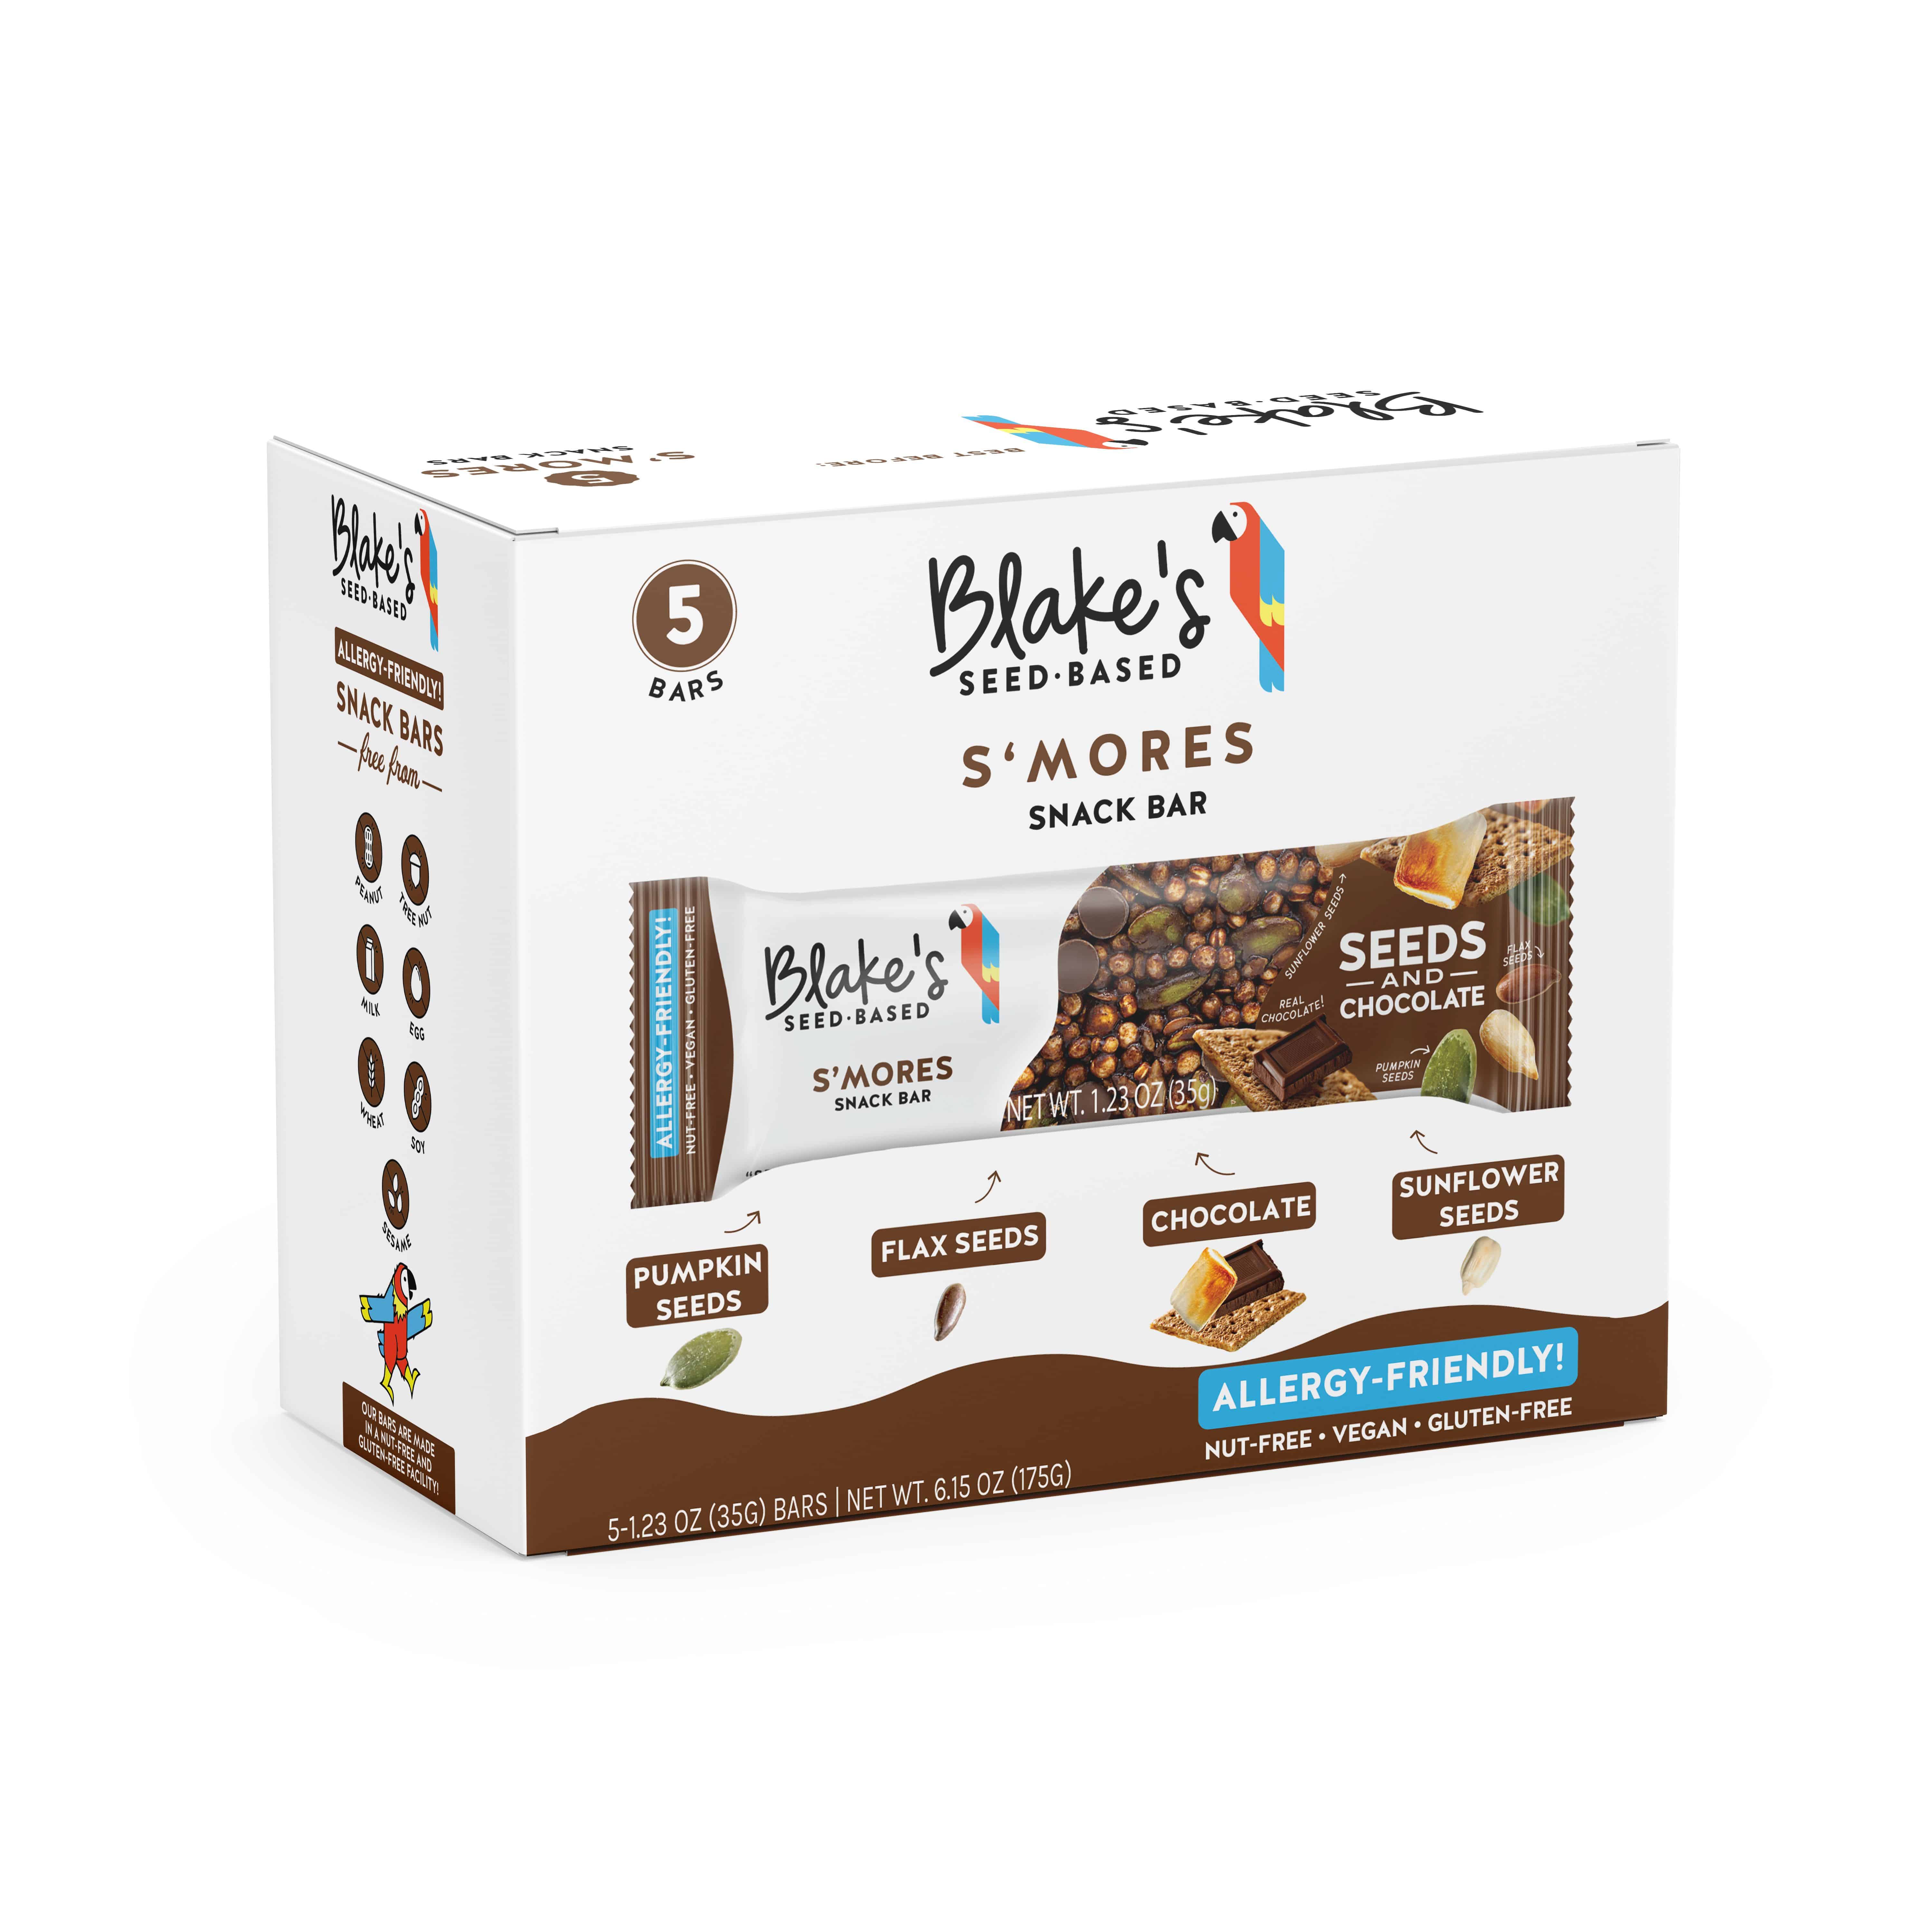 Blake's Seed Based S'mores Snack Bar 6 innerpacks per case 6.2 oz